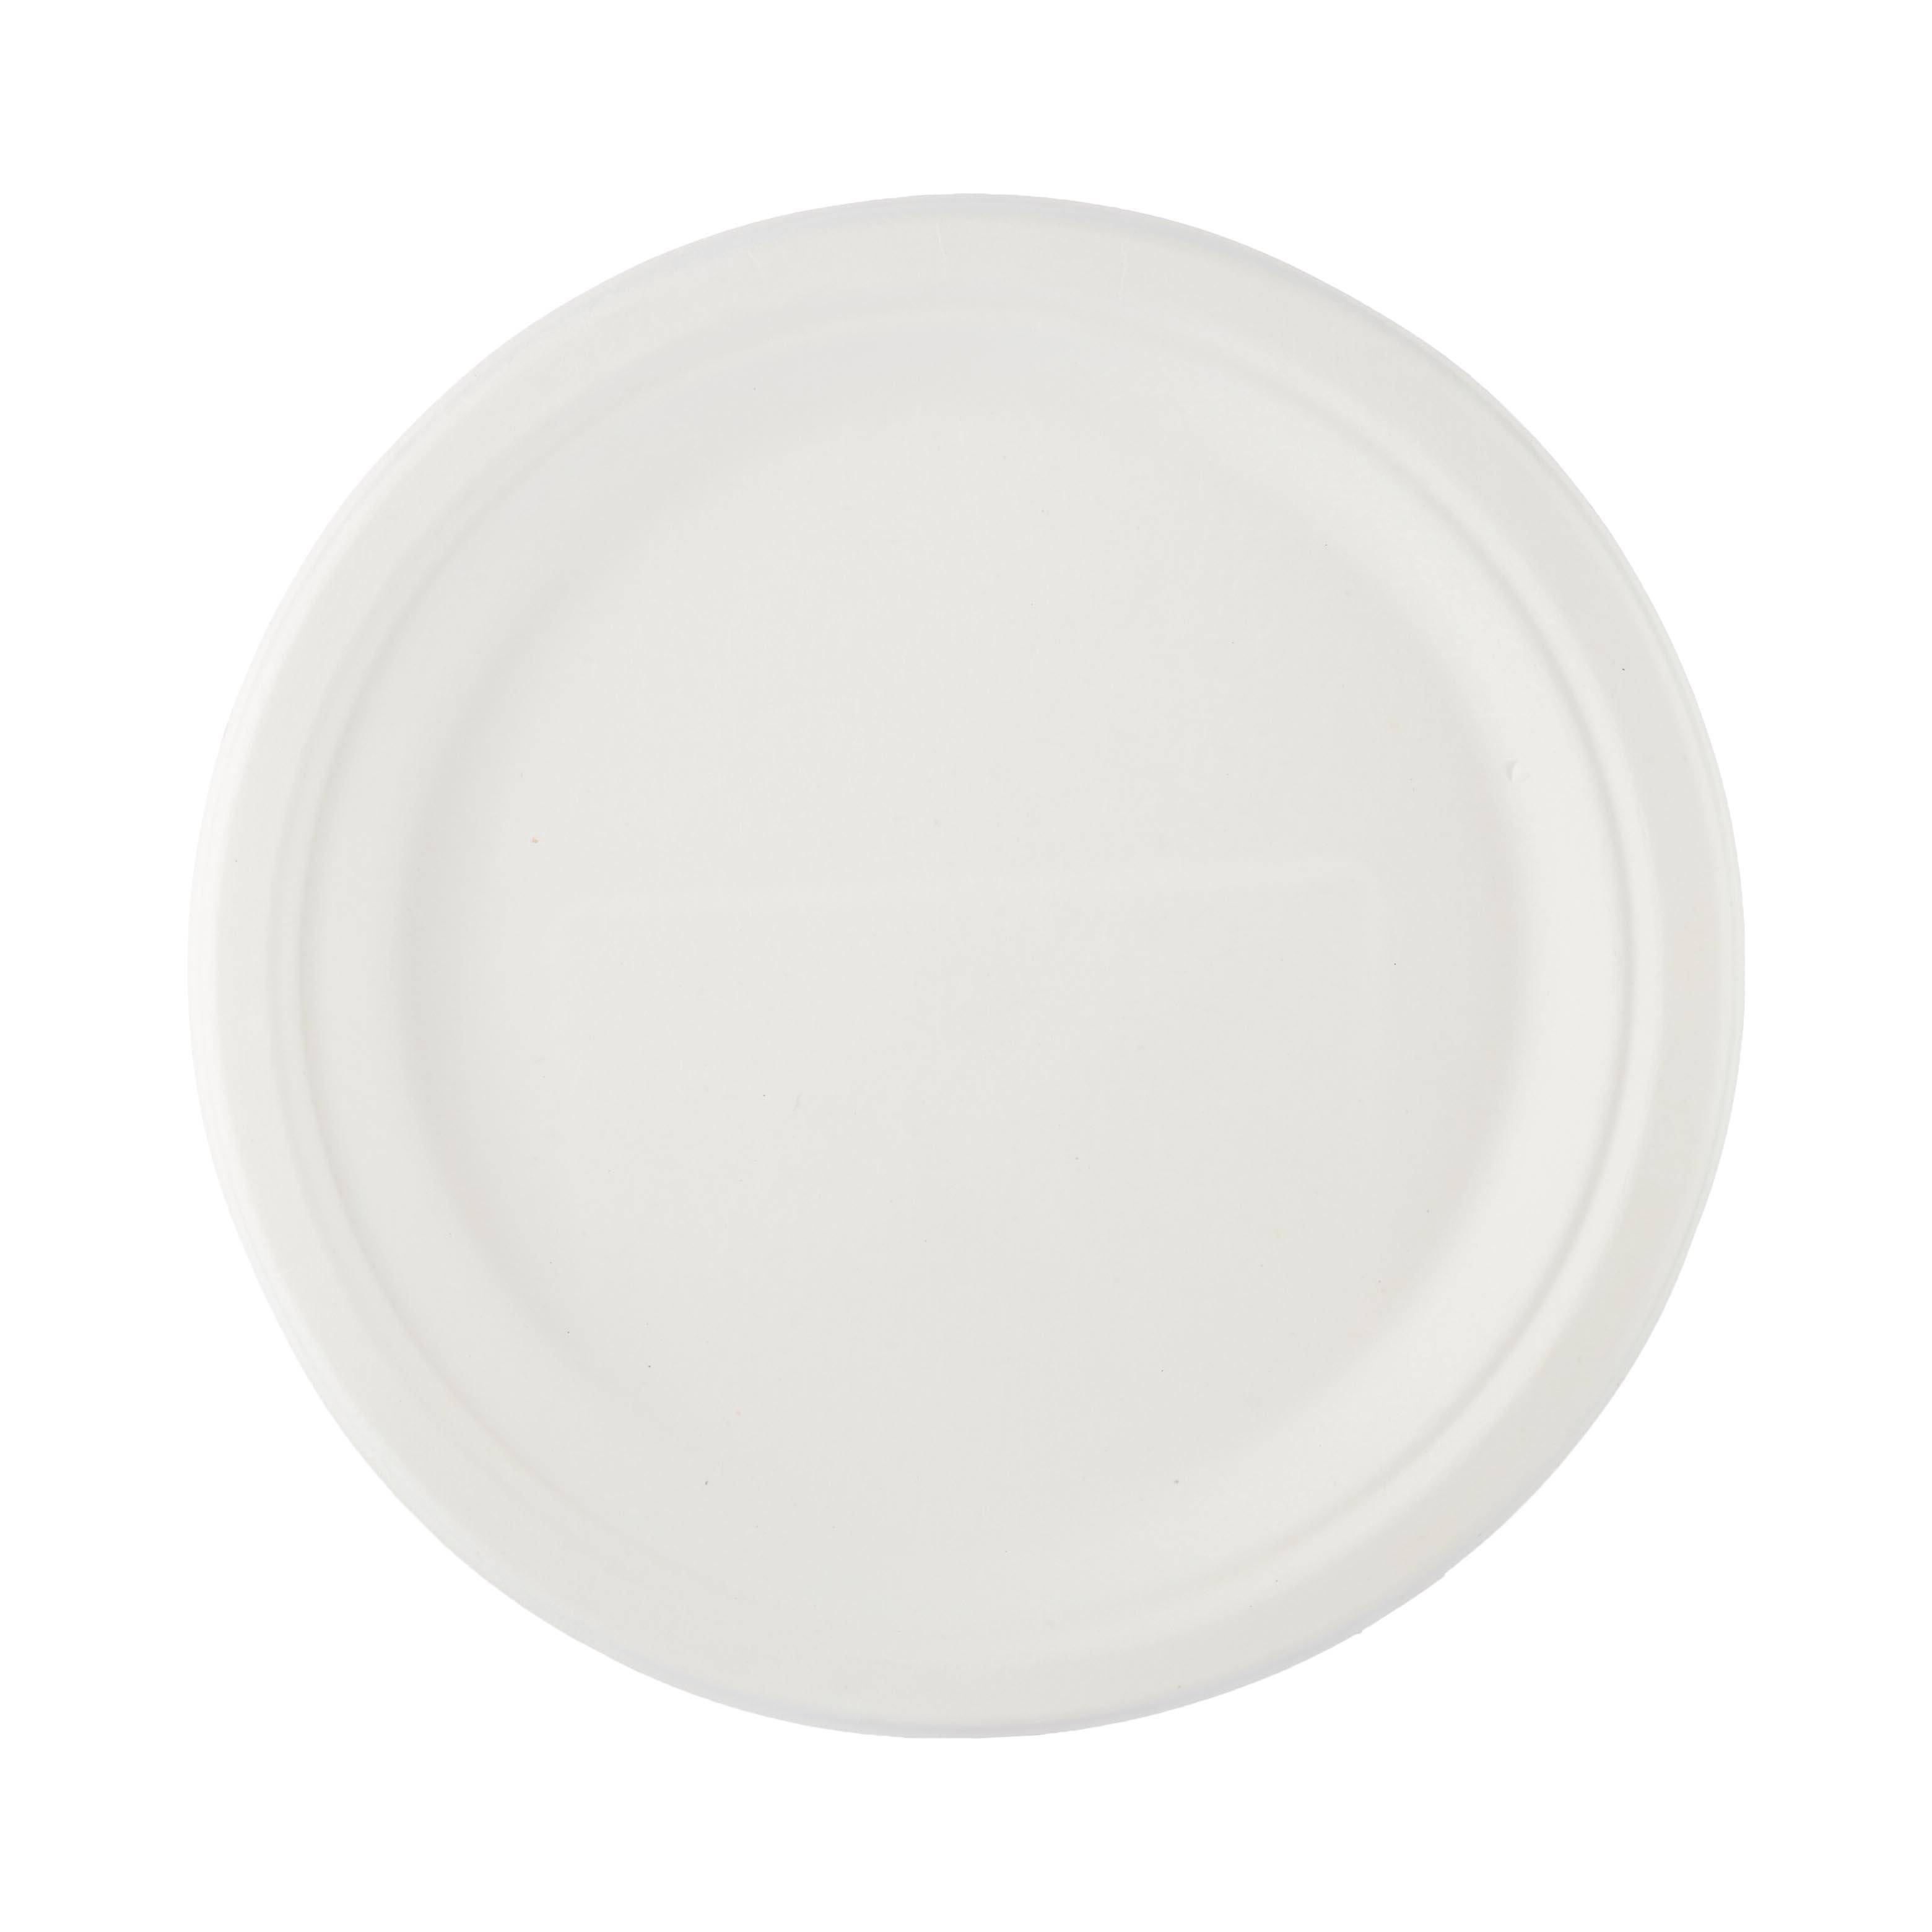 Bio-Degradable White Round Plate 9 Inch